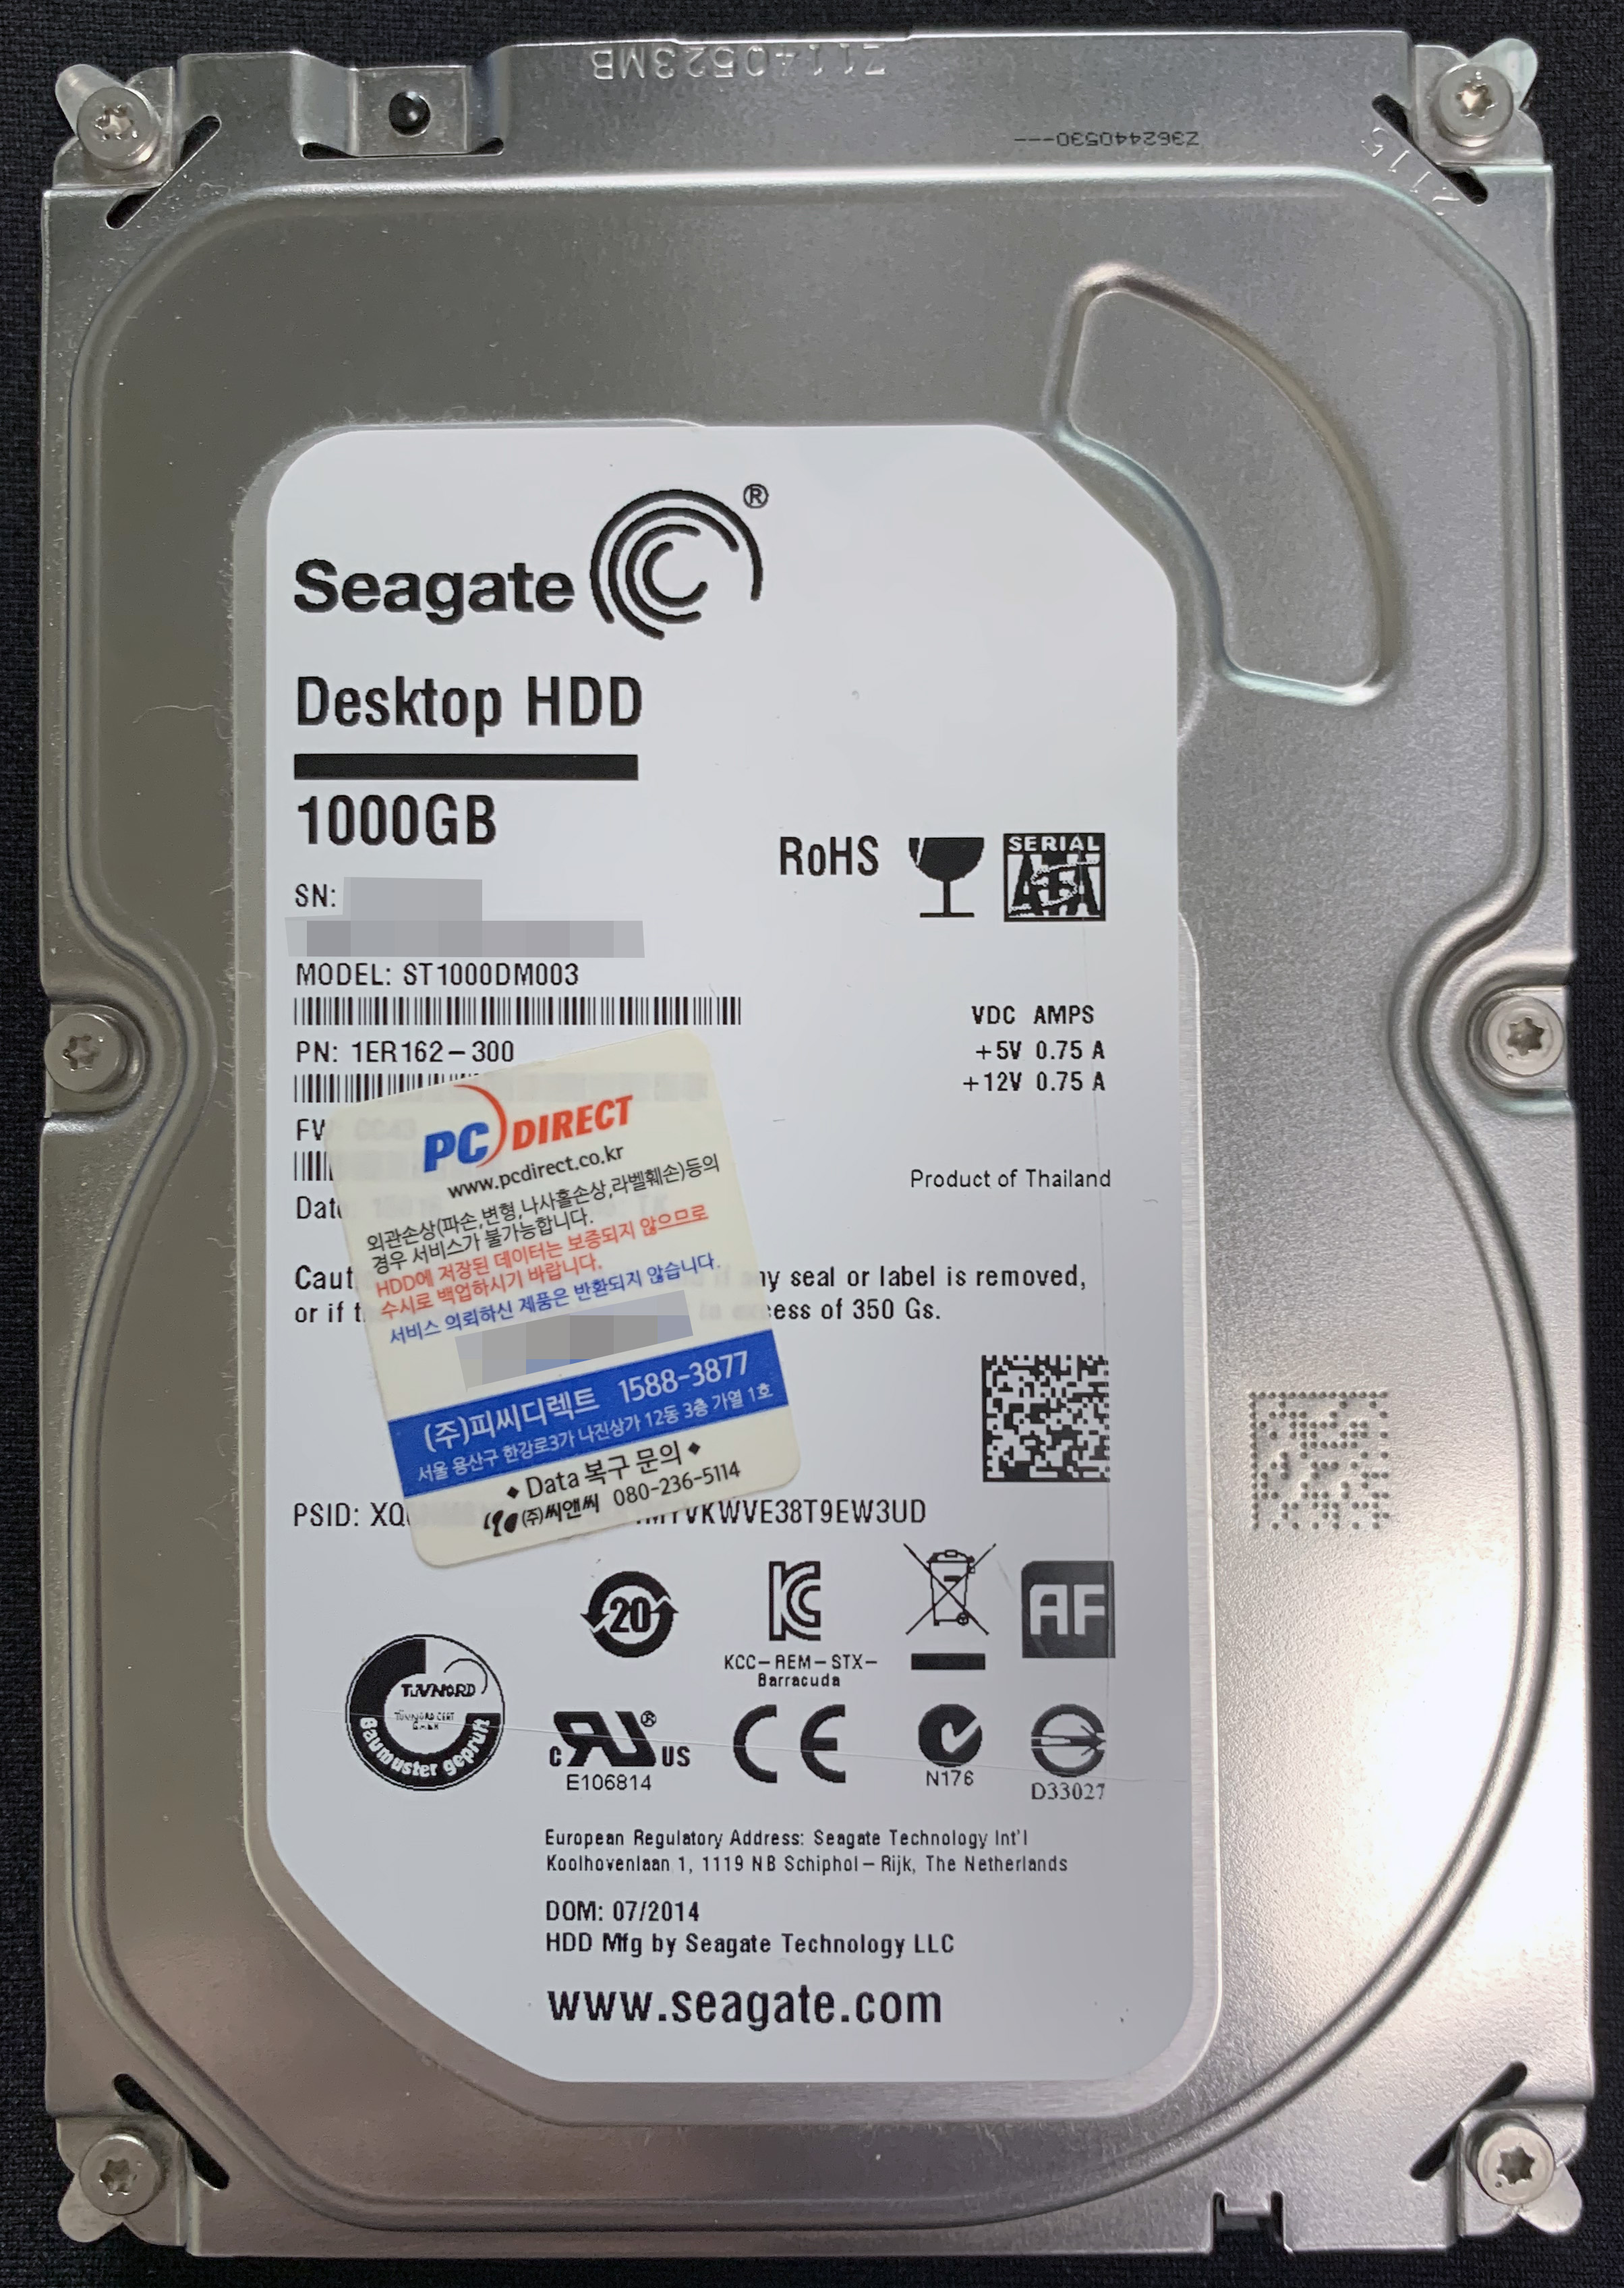 Seagate Desktop HDD 1TB (ST1000DM003-1ER162)